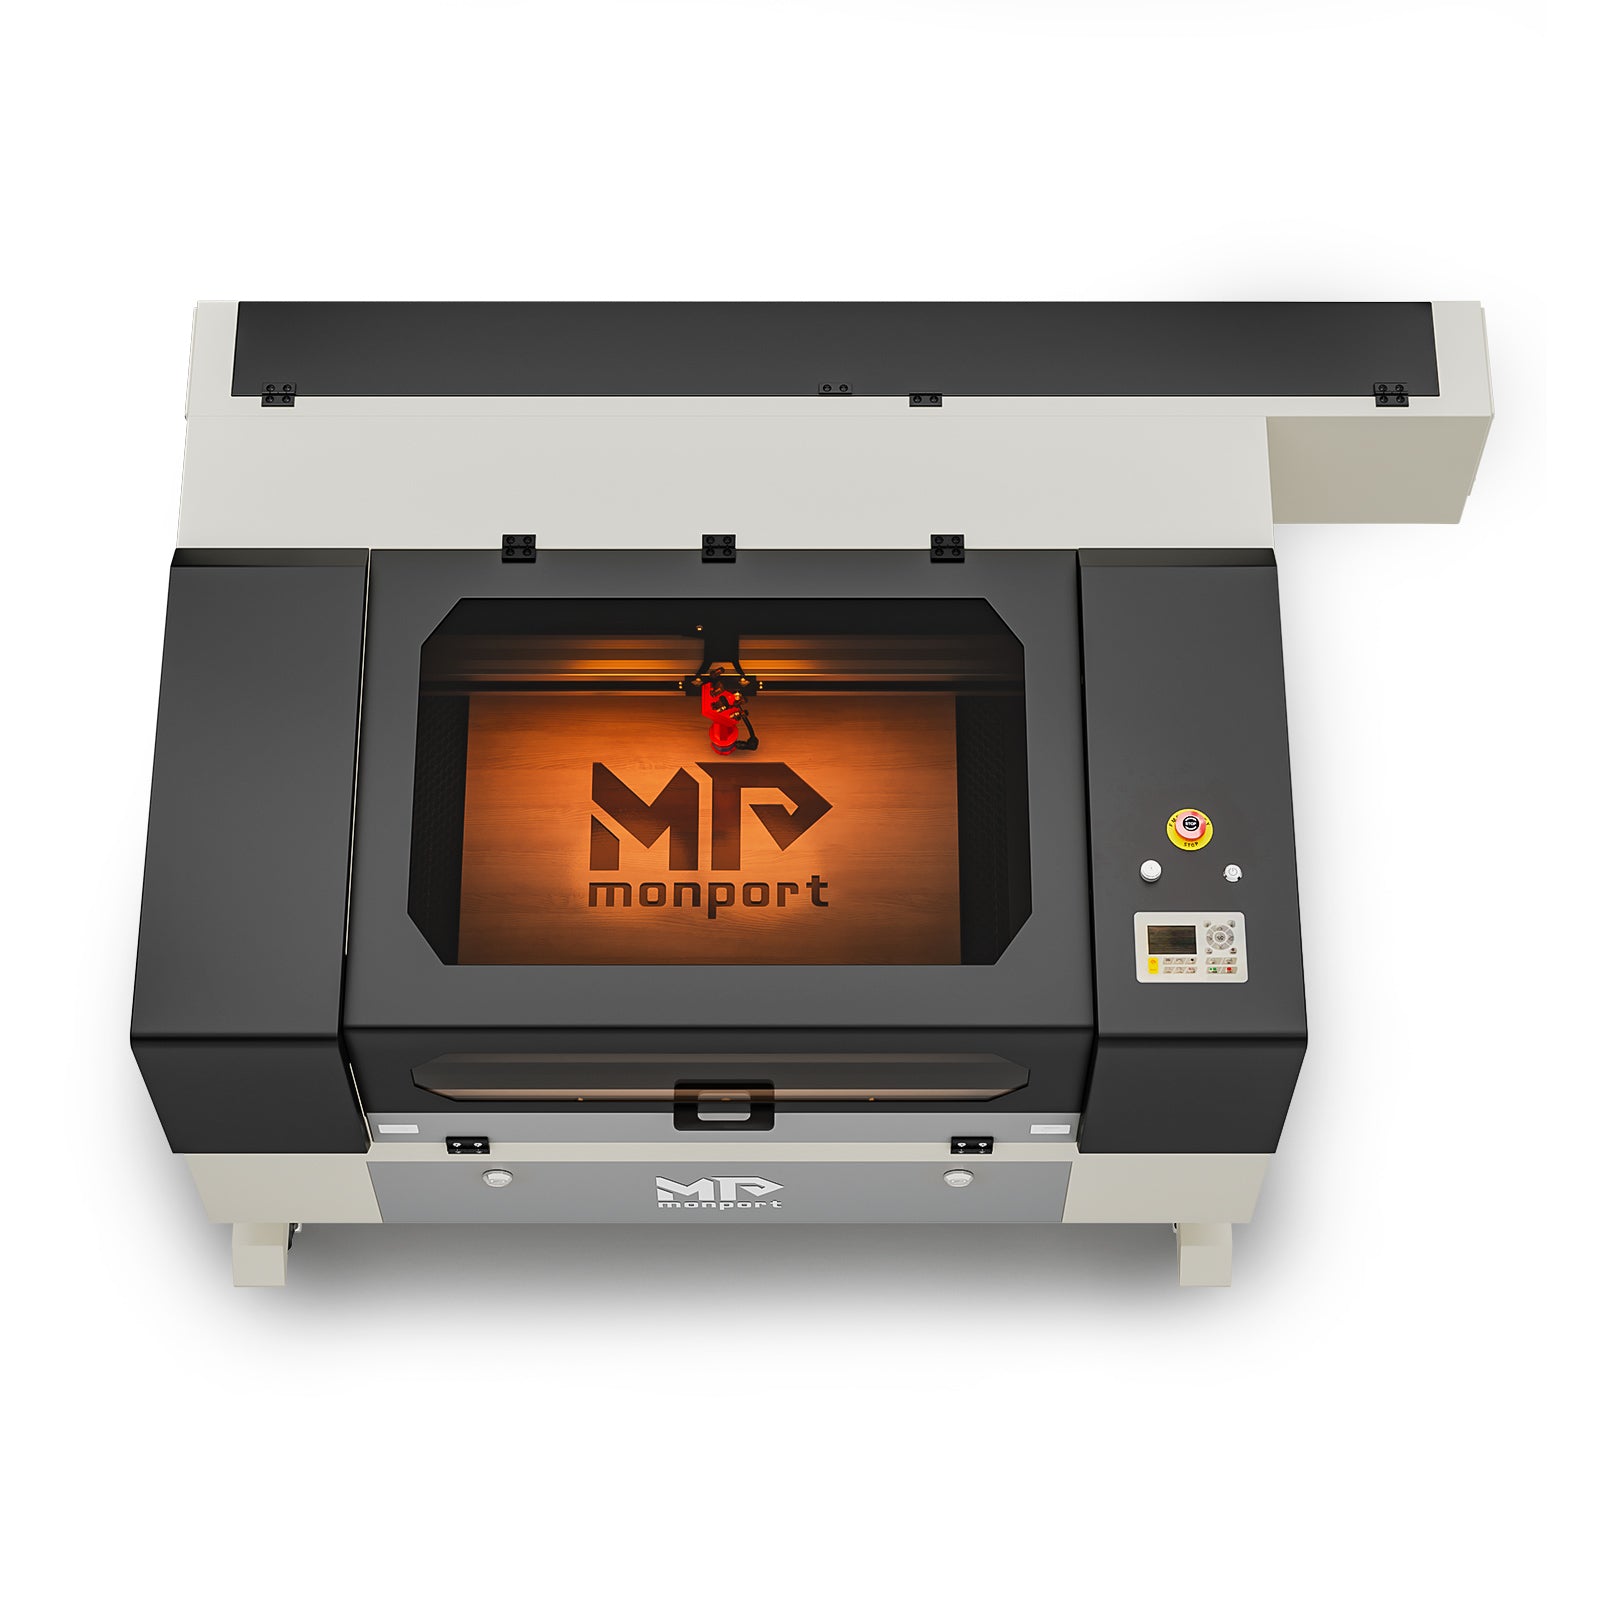 Monport 100W CO2 Laser Engraver & Cutter (28